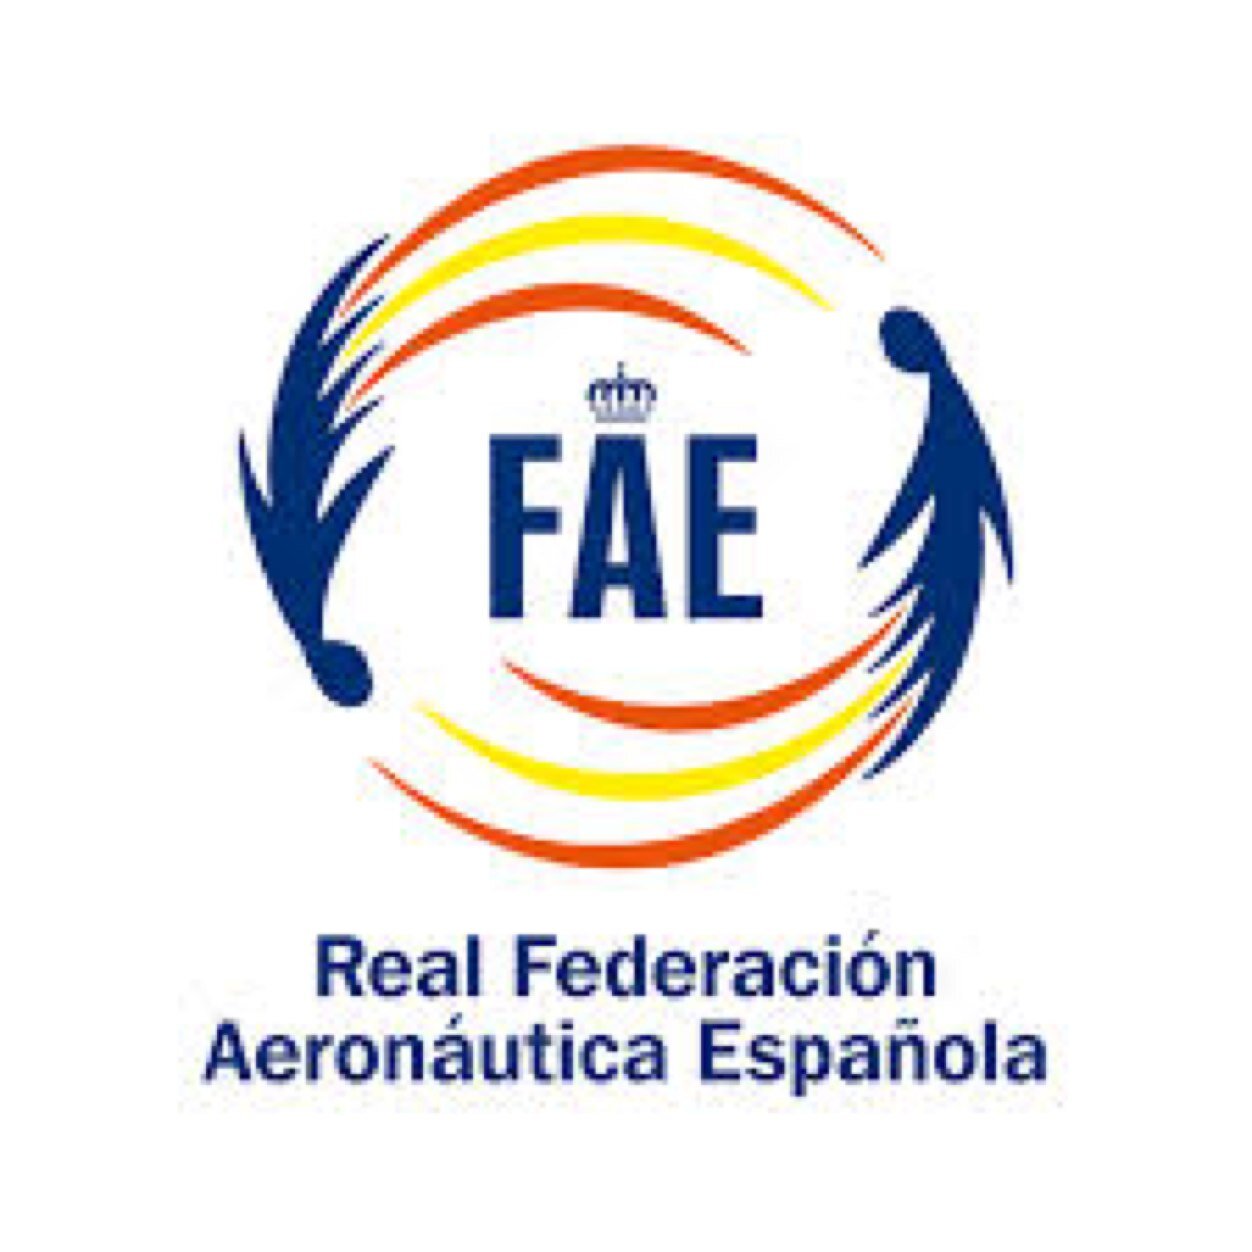 Twitter Oficial de la Real Federación Aeronáutica Española. Official Twitter of the Royal Spanish Aeronautical Federation.